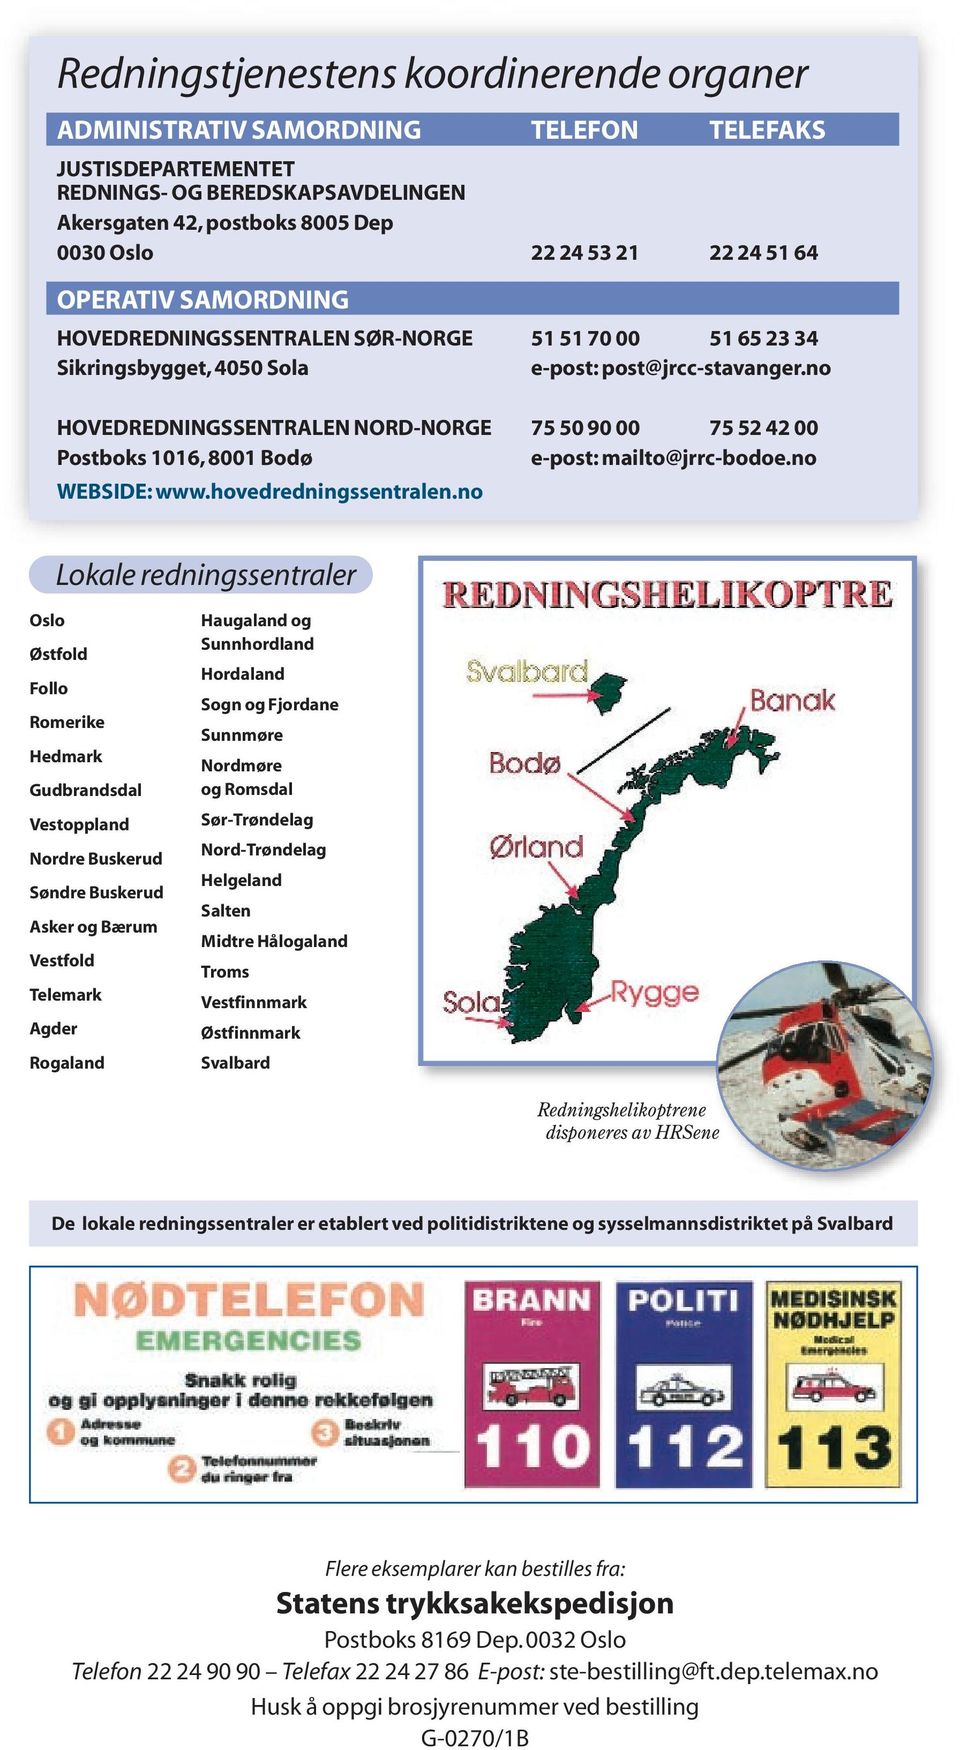 no HOVEDREDNINGSSENTRALEN NORD-NORGE 75 50 90 00 75 52 42 00 Postboks 1016, 8001 Bodø e-post: mailto@jrrc-bodoe.no WEBSIDE: www.hovedredningssentralen.